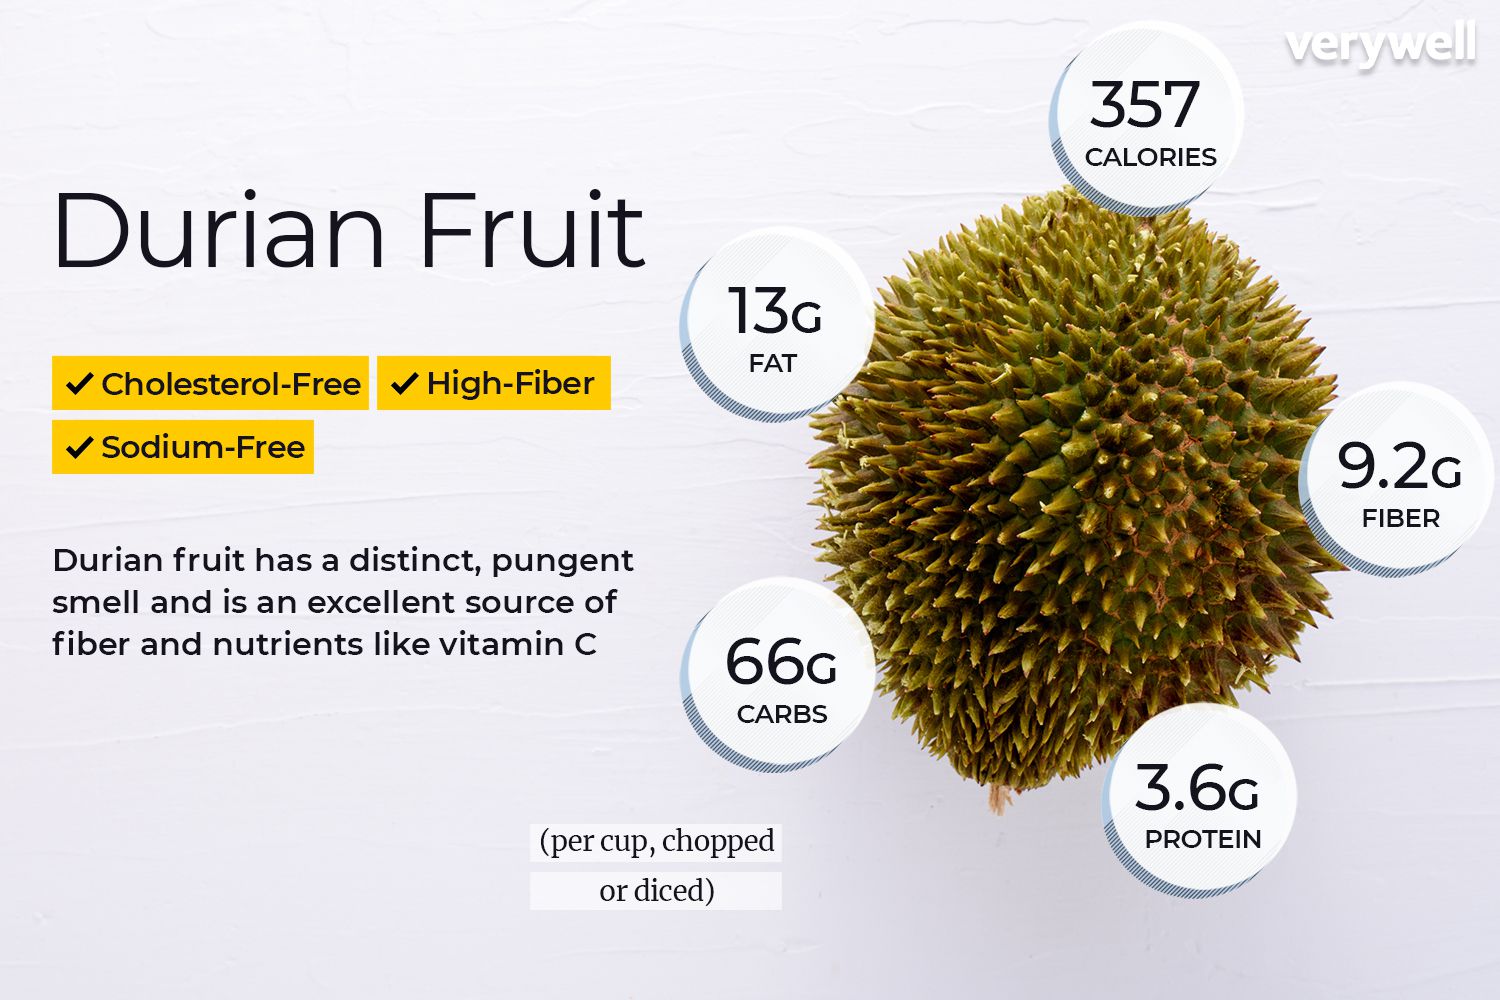 durian benefits - can pregnant women eat durian